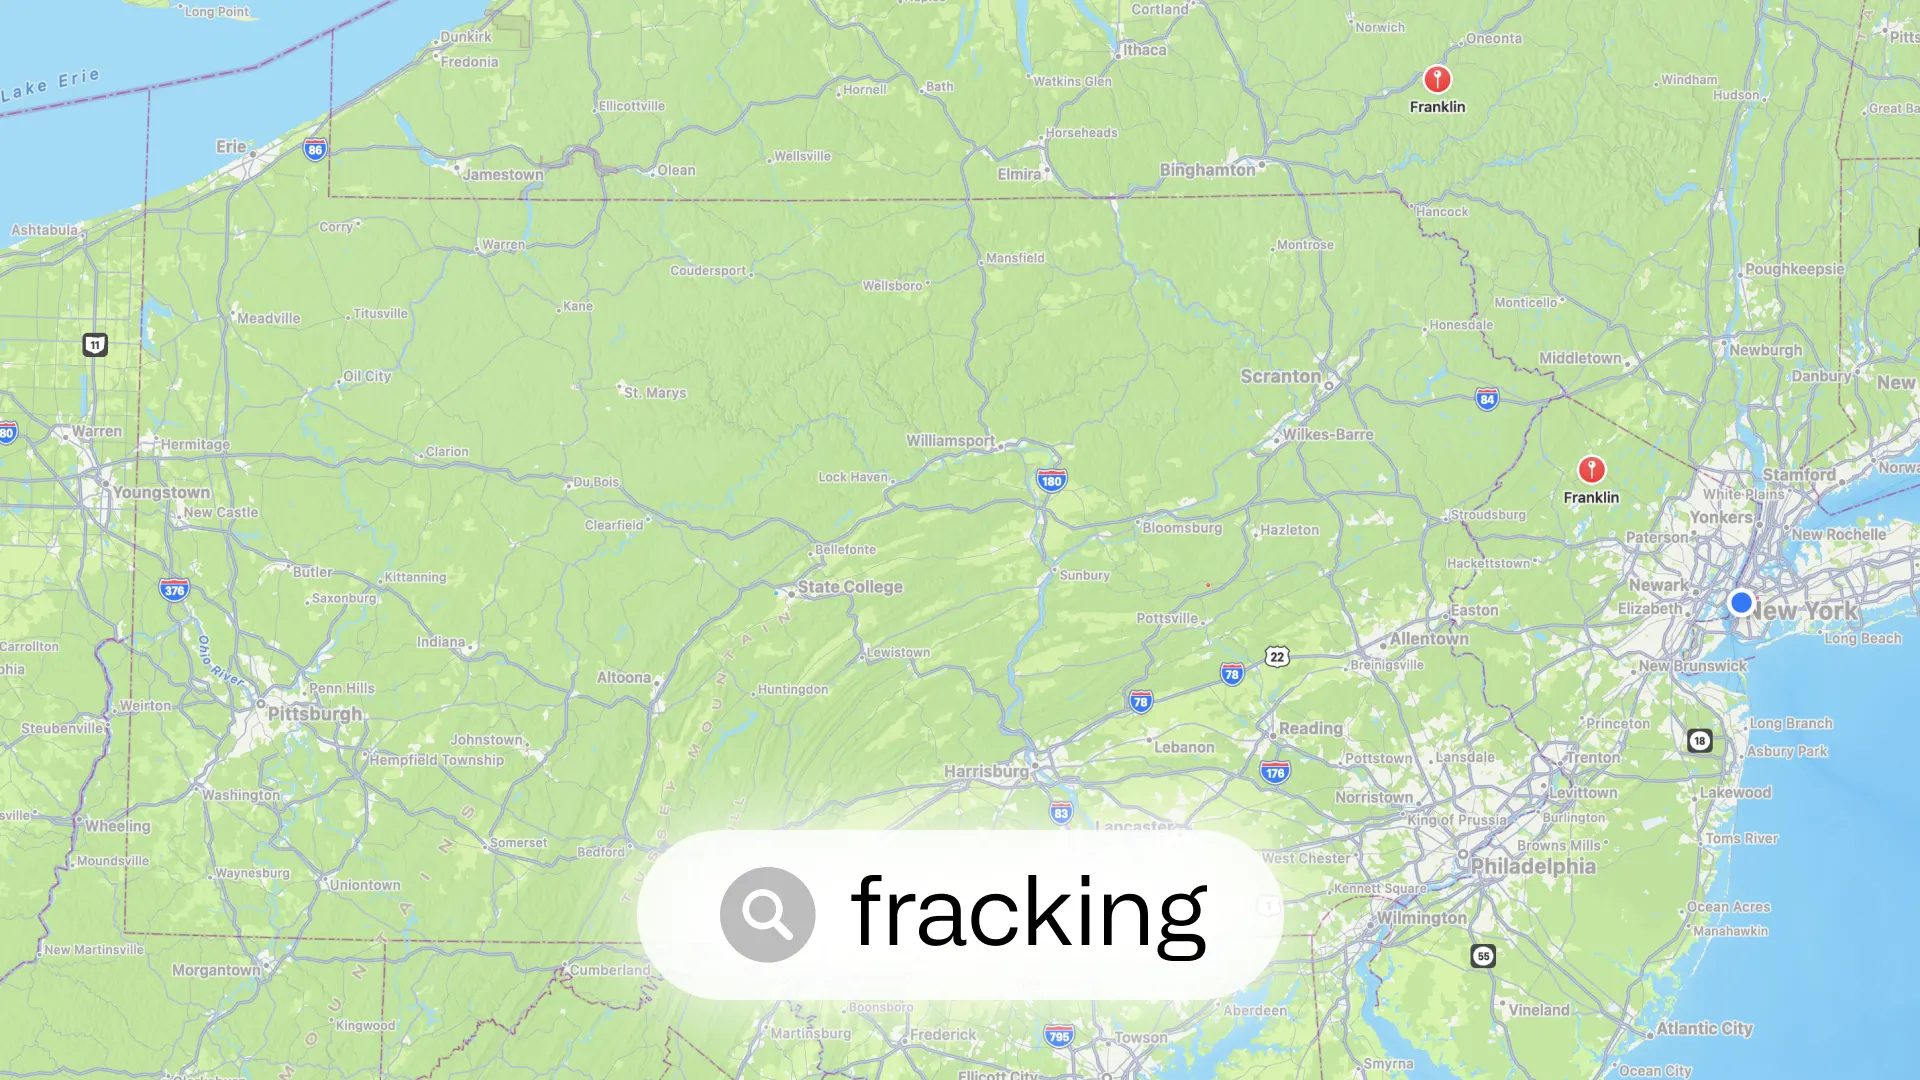 Apple Maps results for “fracking”